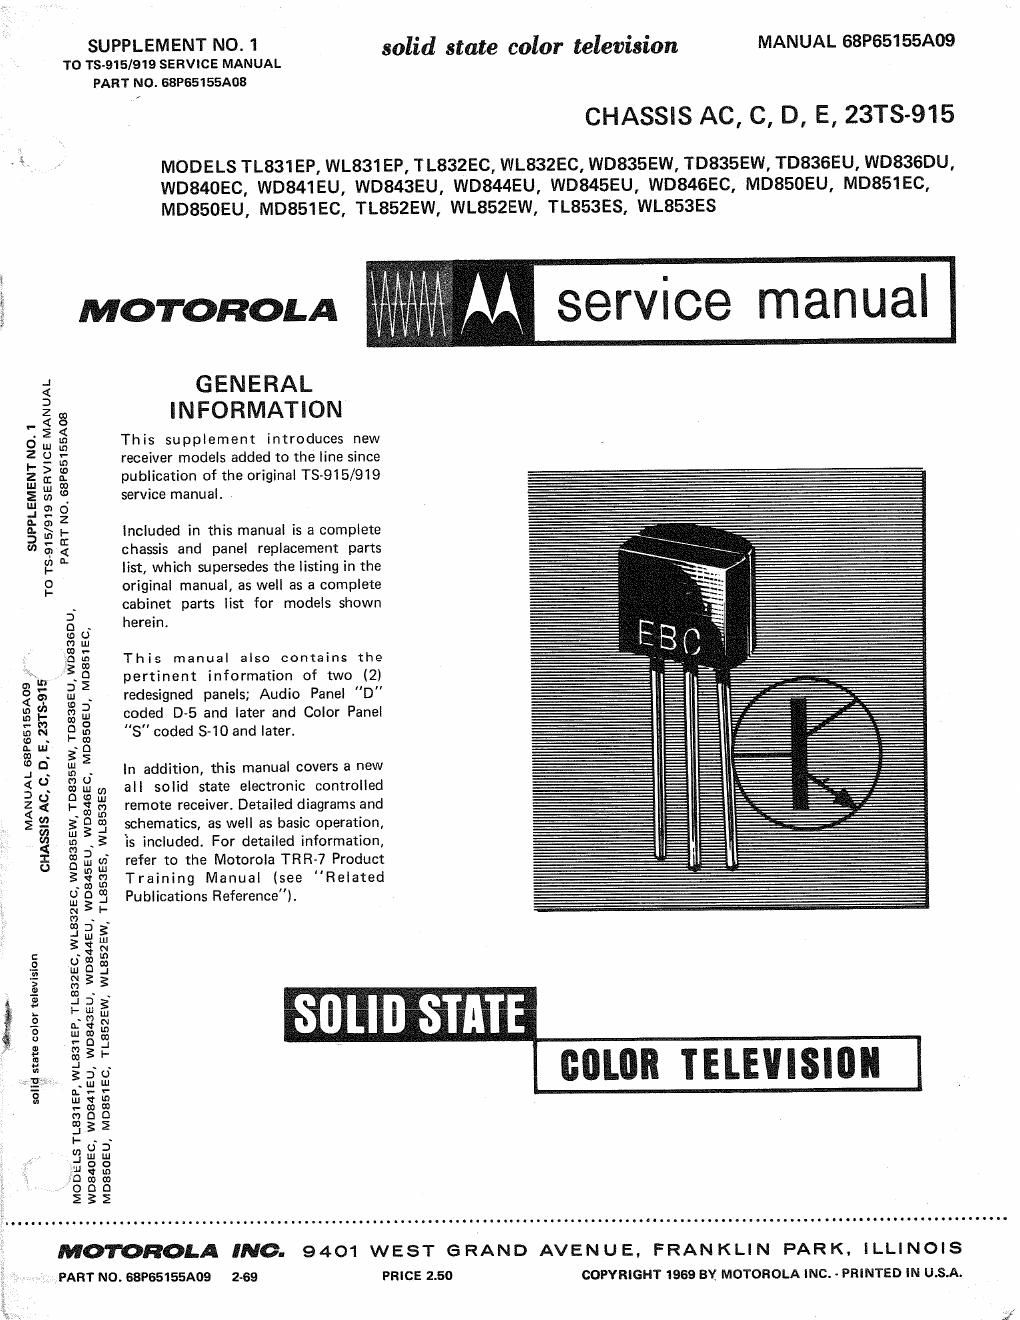 motorola wd 846 ec service manual